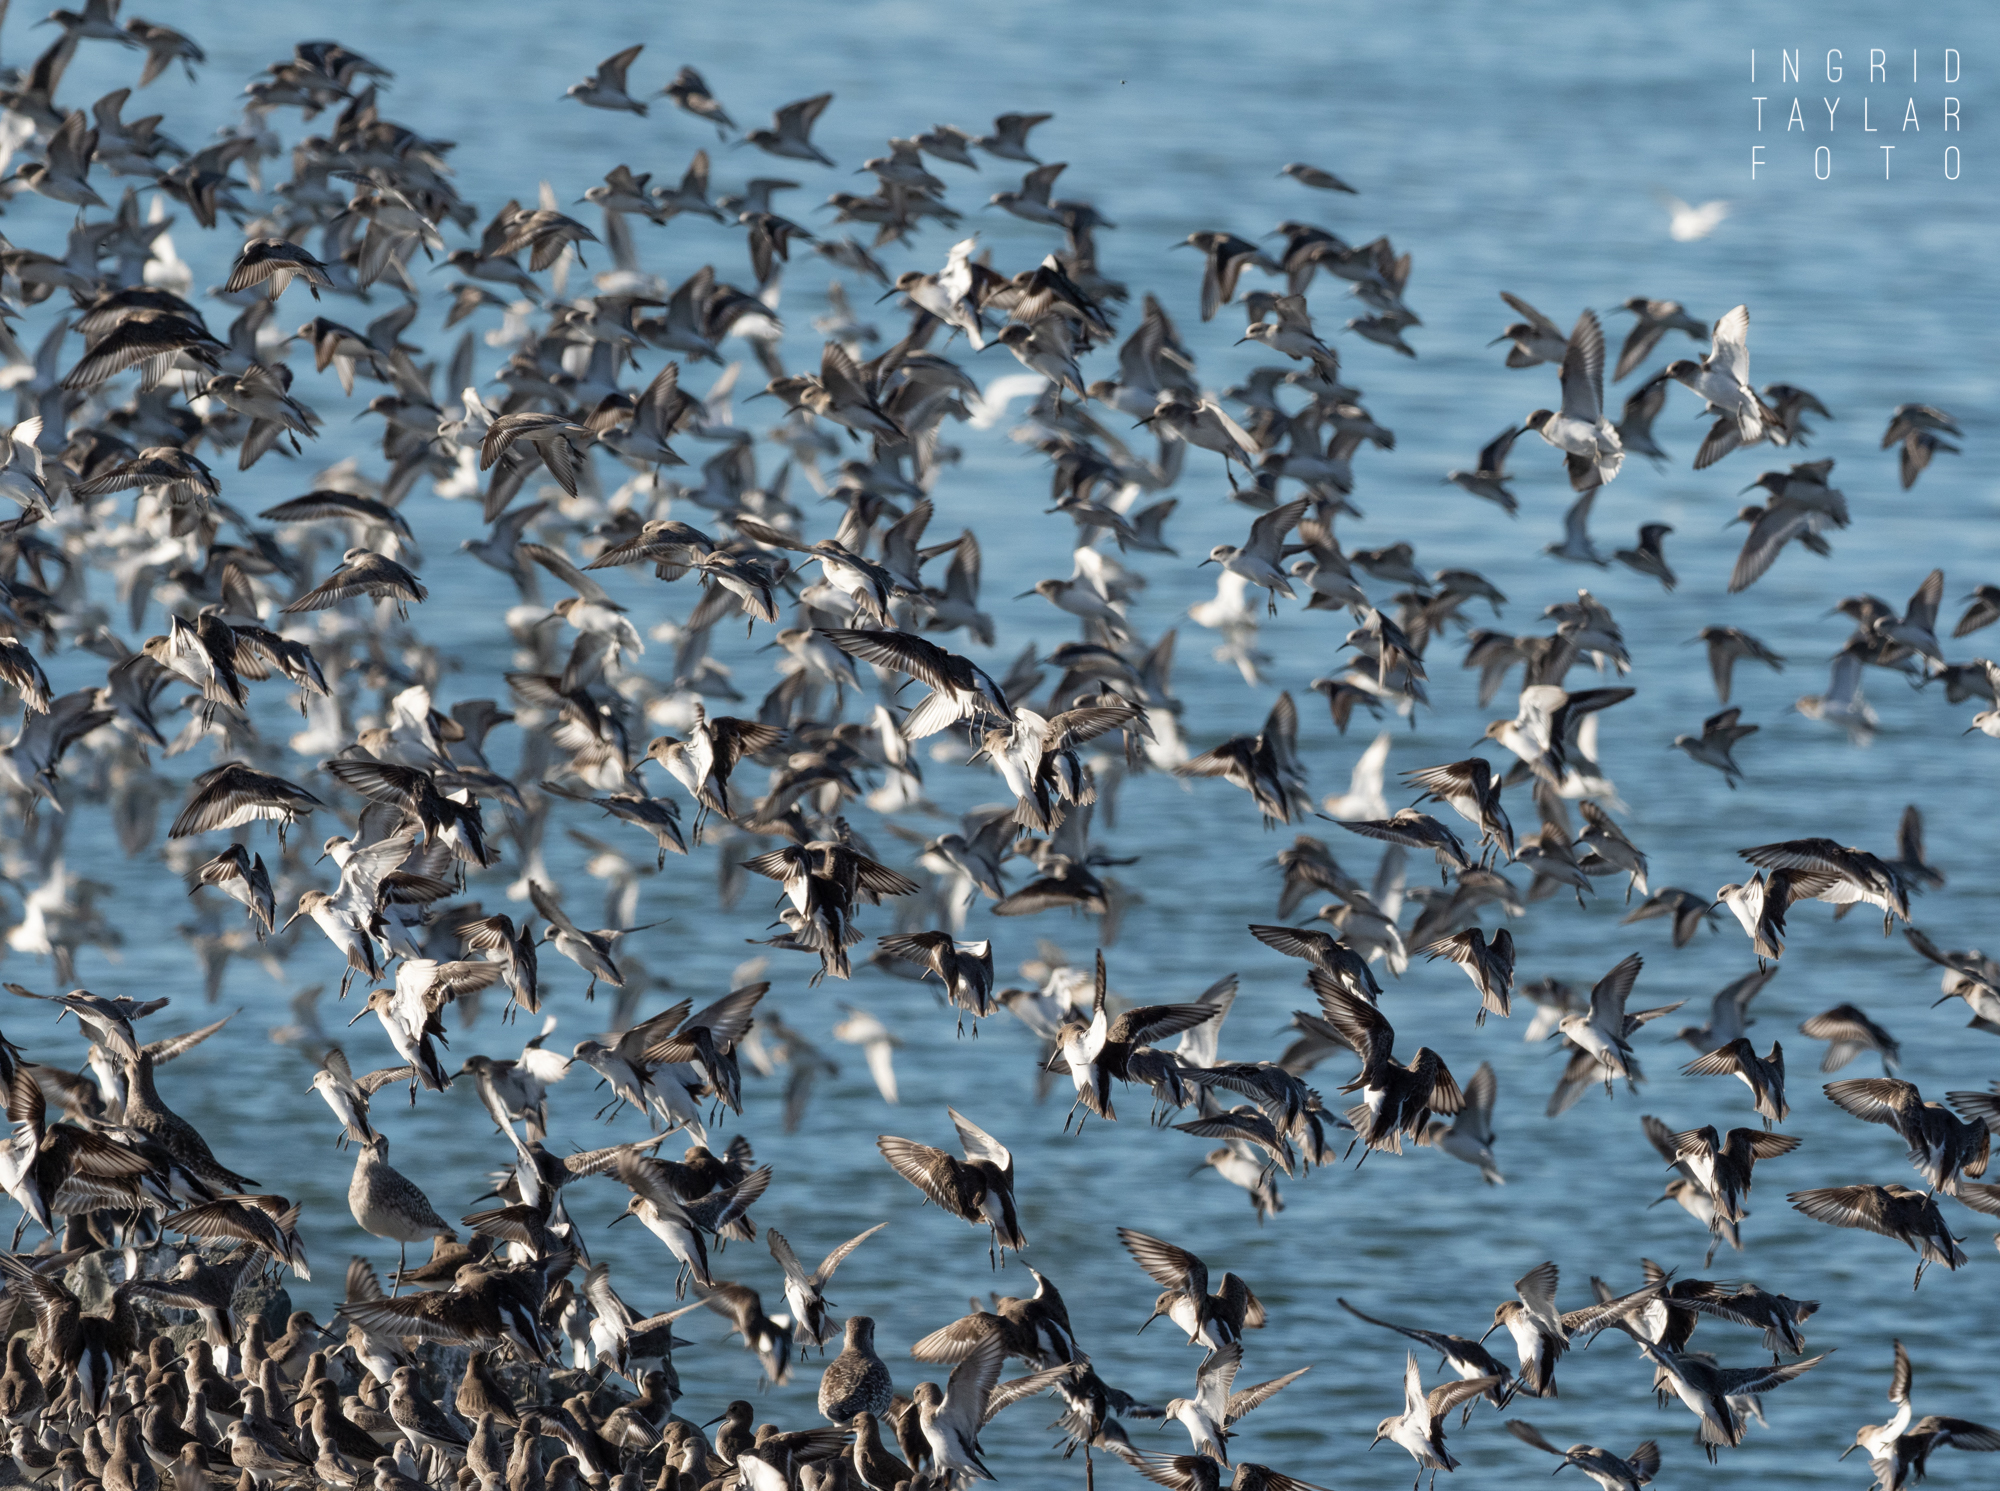 Shorebirds on San Francisco Bay